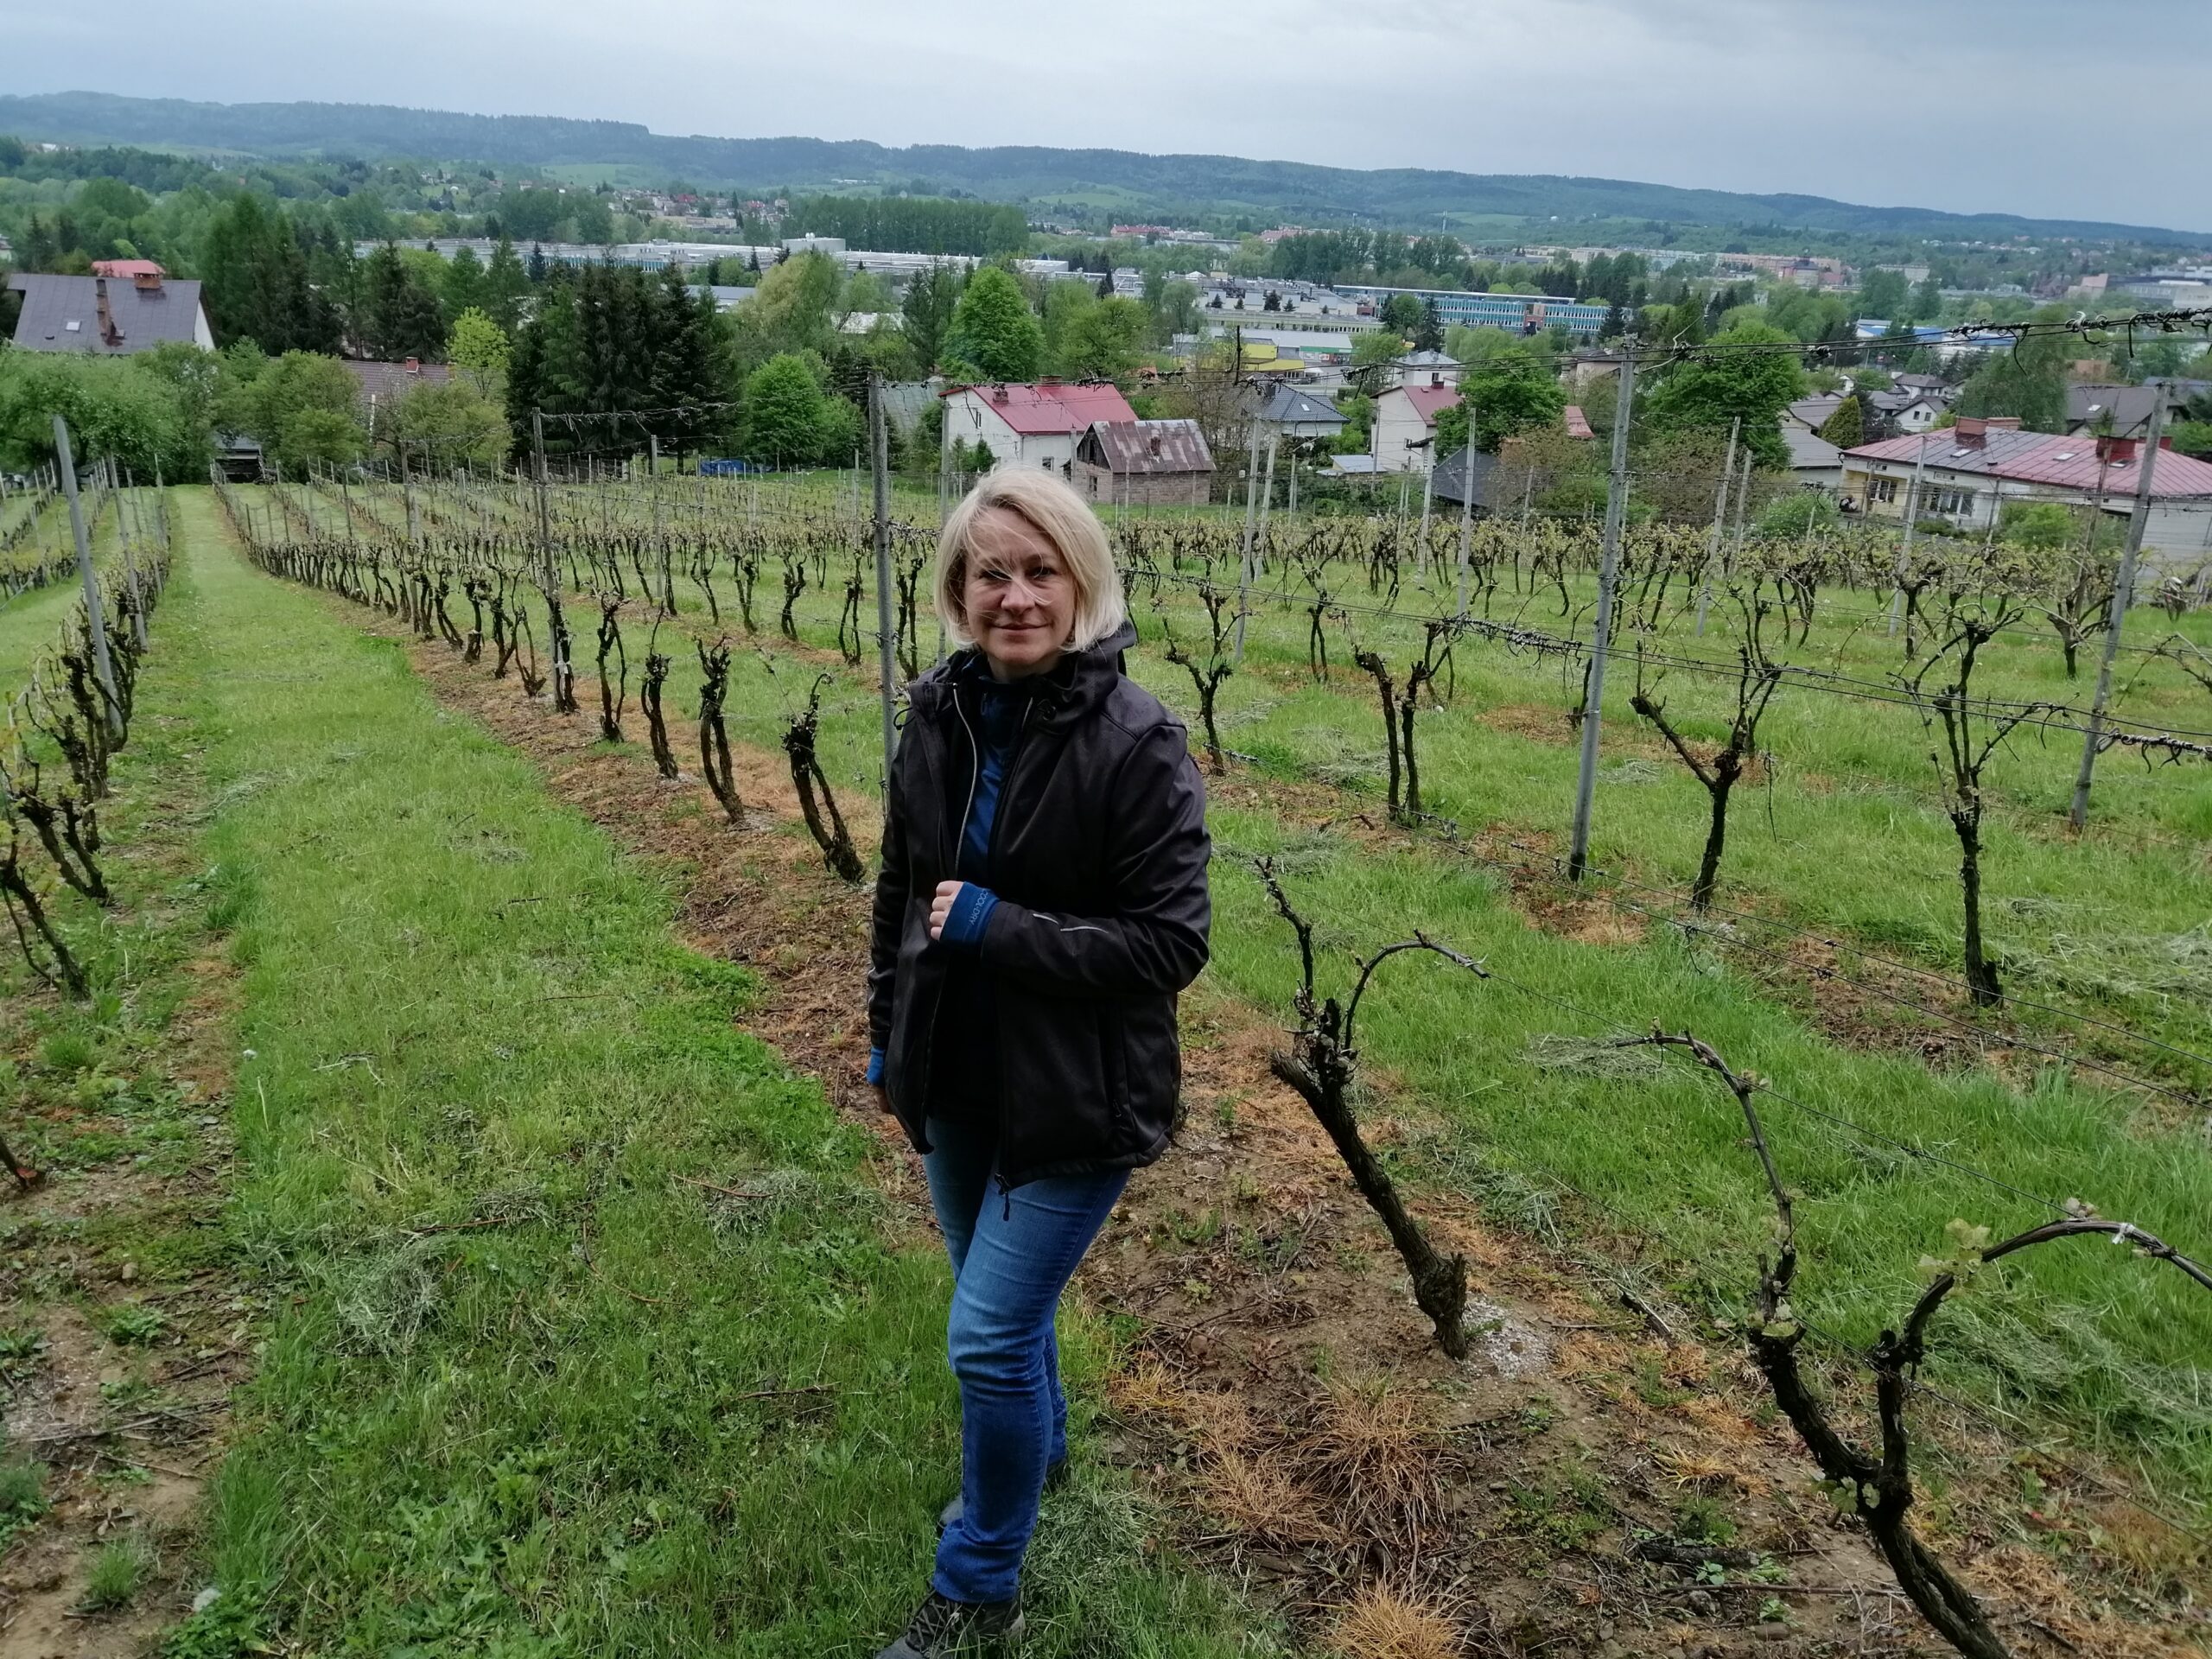 Winnice i enoturystyka w Polsce